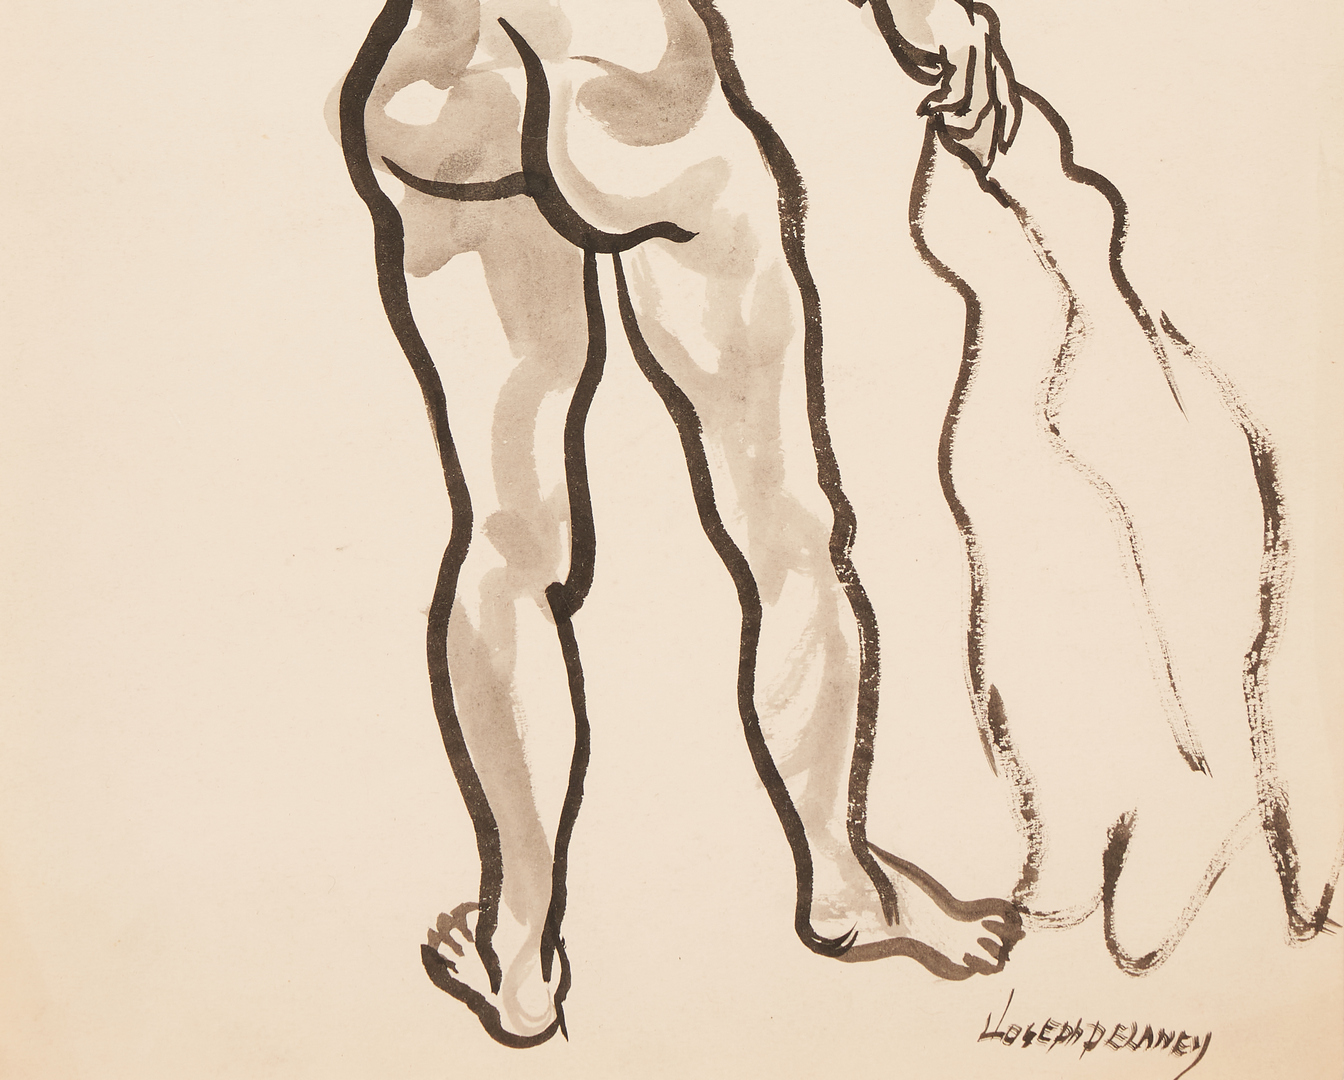 Lot 179: Joseph Delaney Nude Watercolor